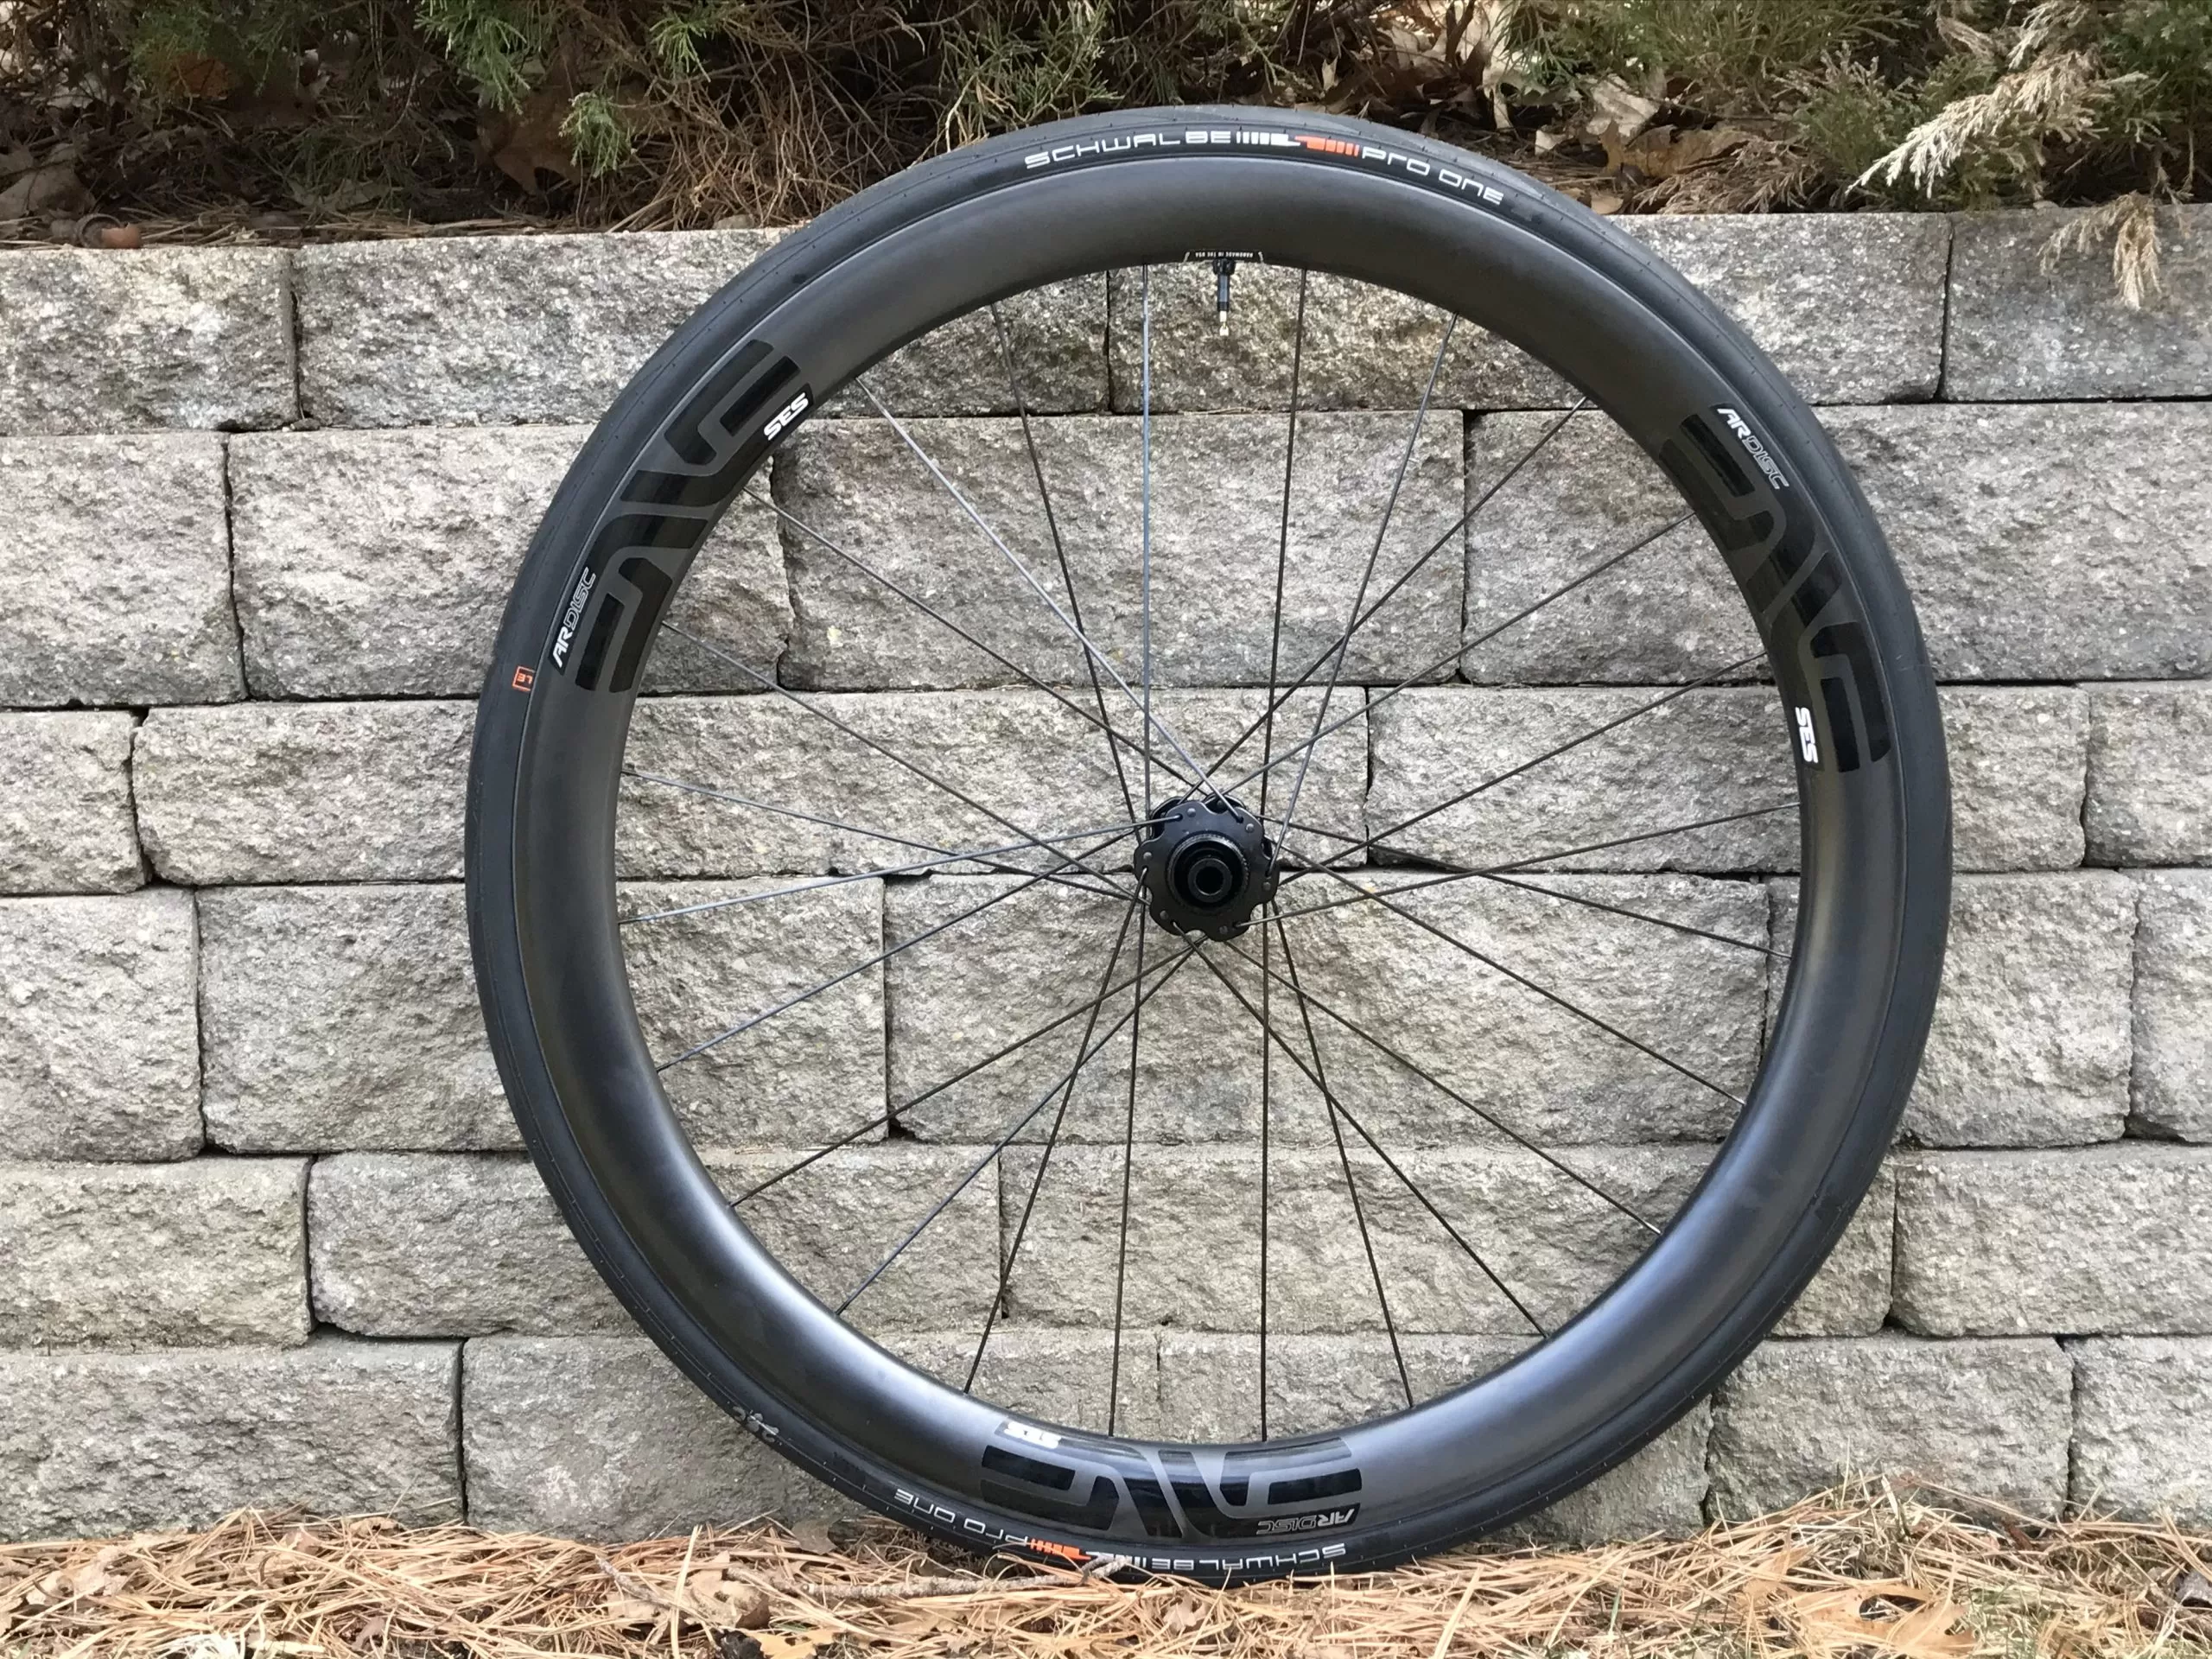 ENVE SES 3.4 lightweight wheels for climbing